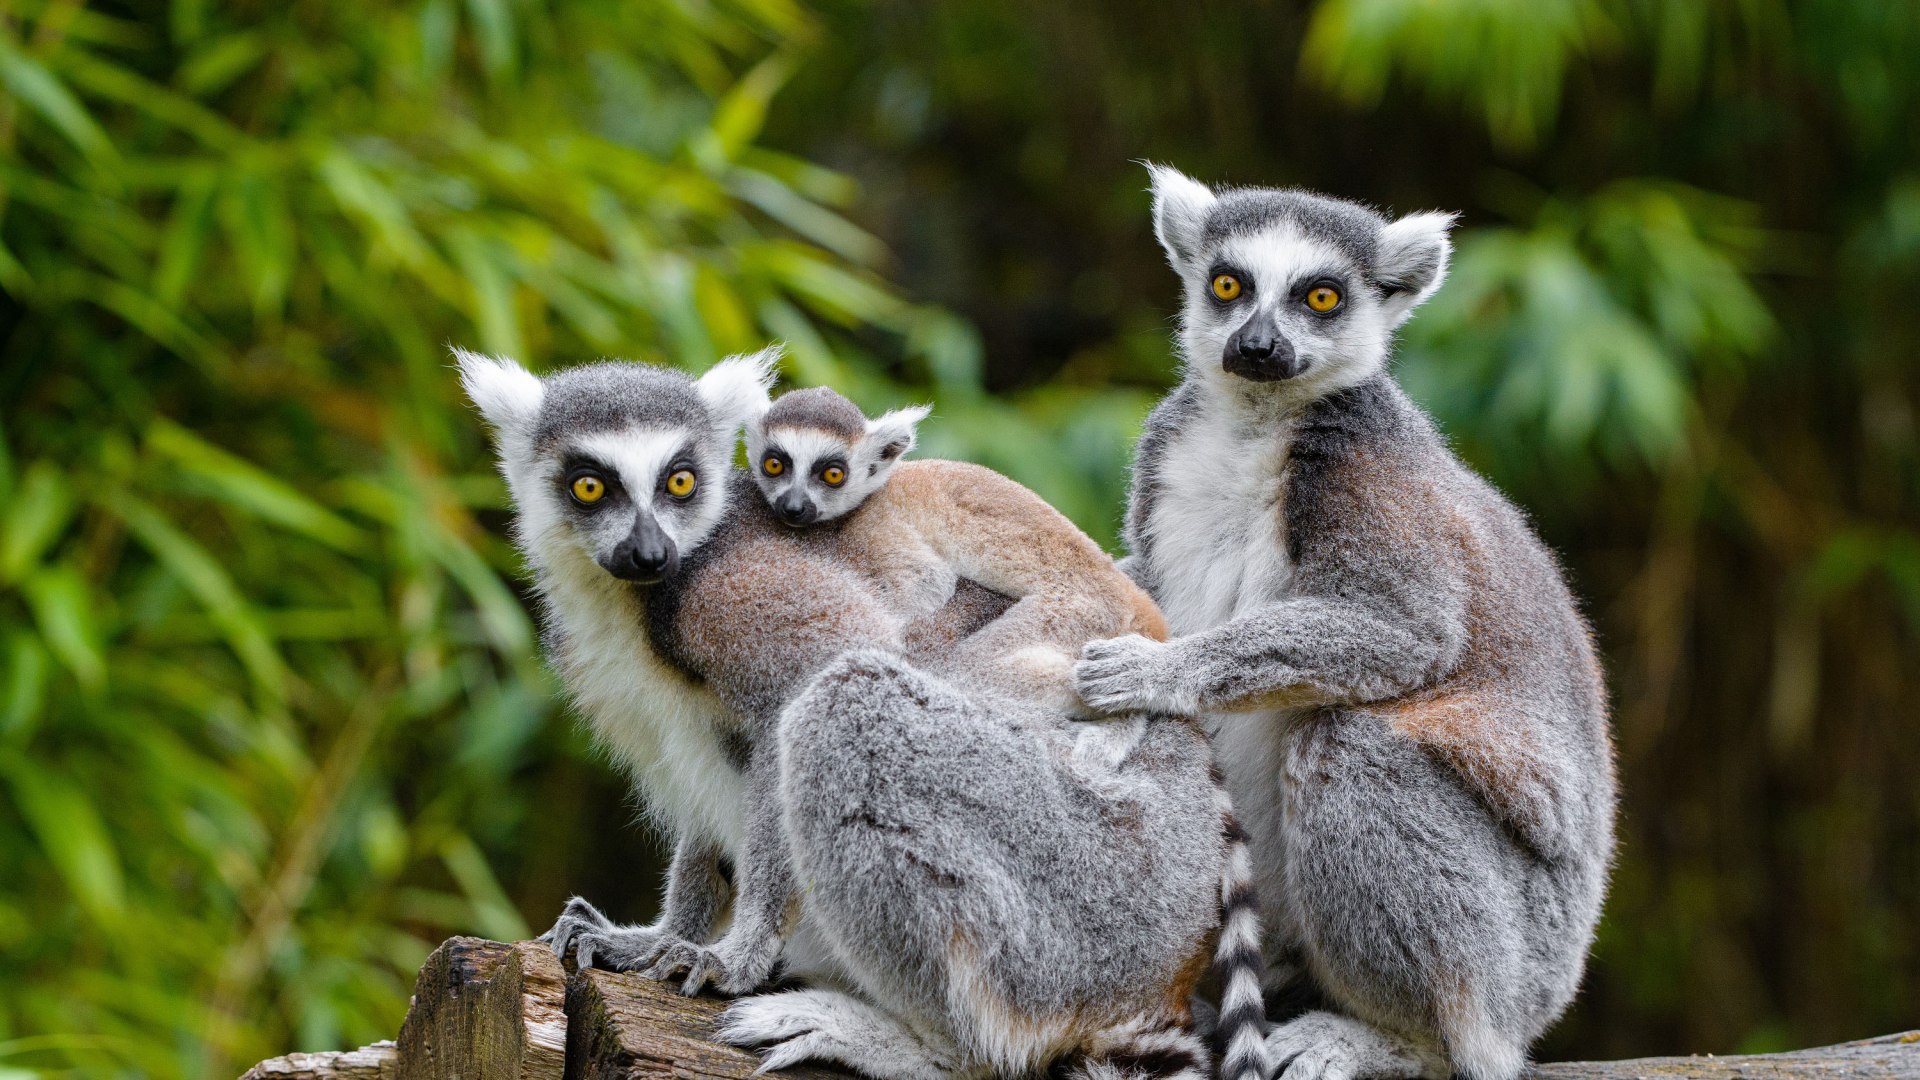 Zoo Duisburg ring-tailed lemur family, © Zoo Duisburg, M. Appel